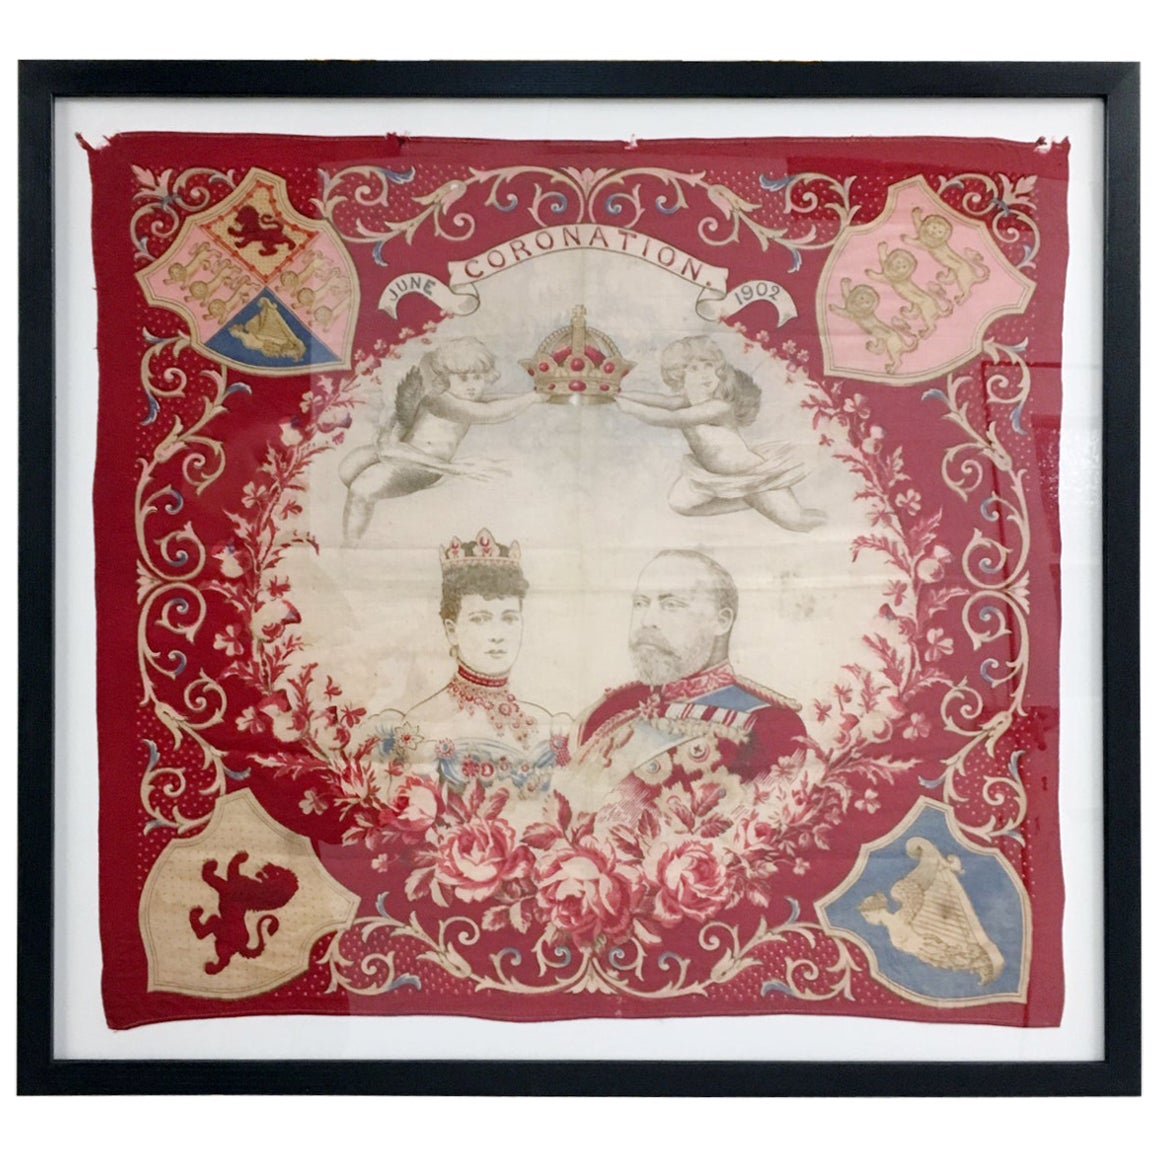 King Edward VII Coronation, June 1902 Framed Red Flag